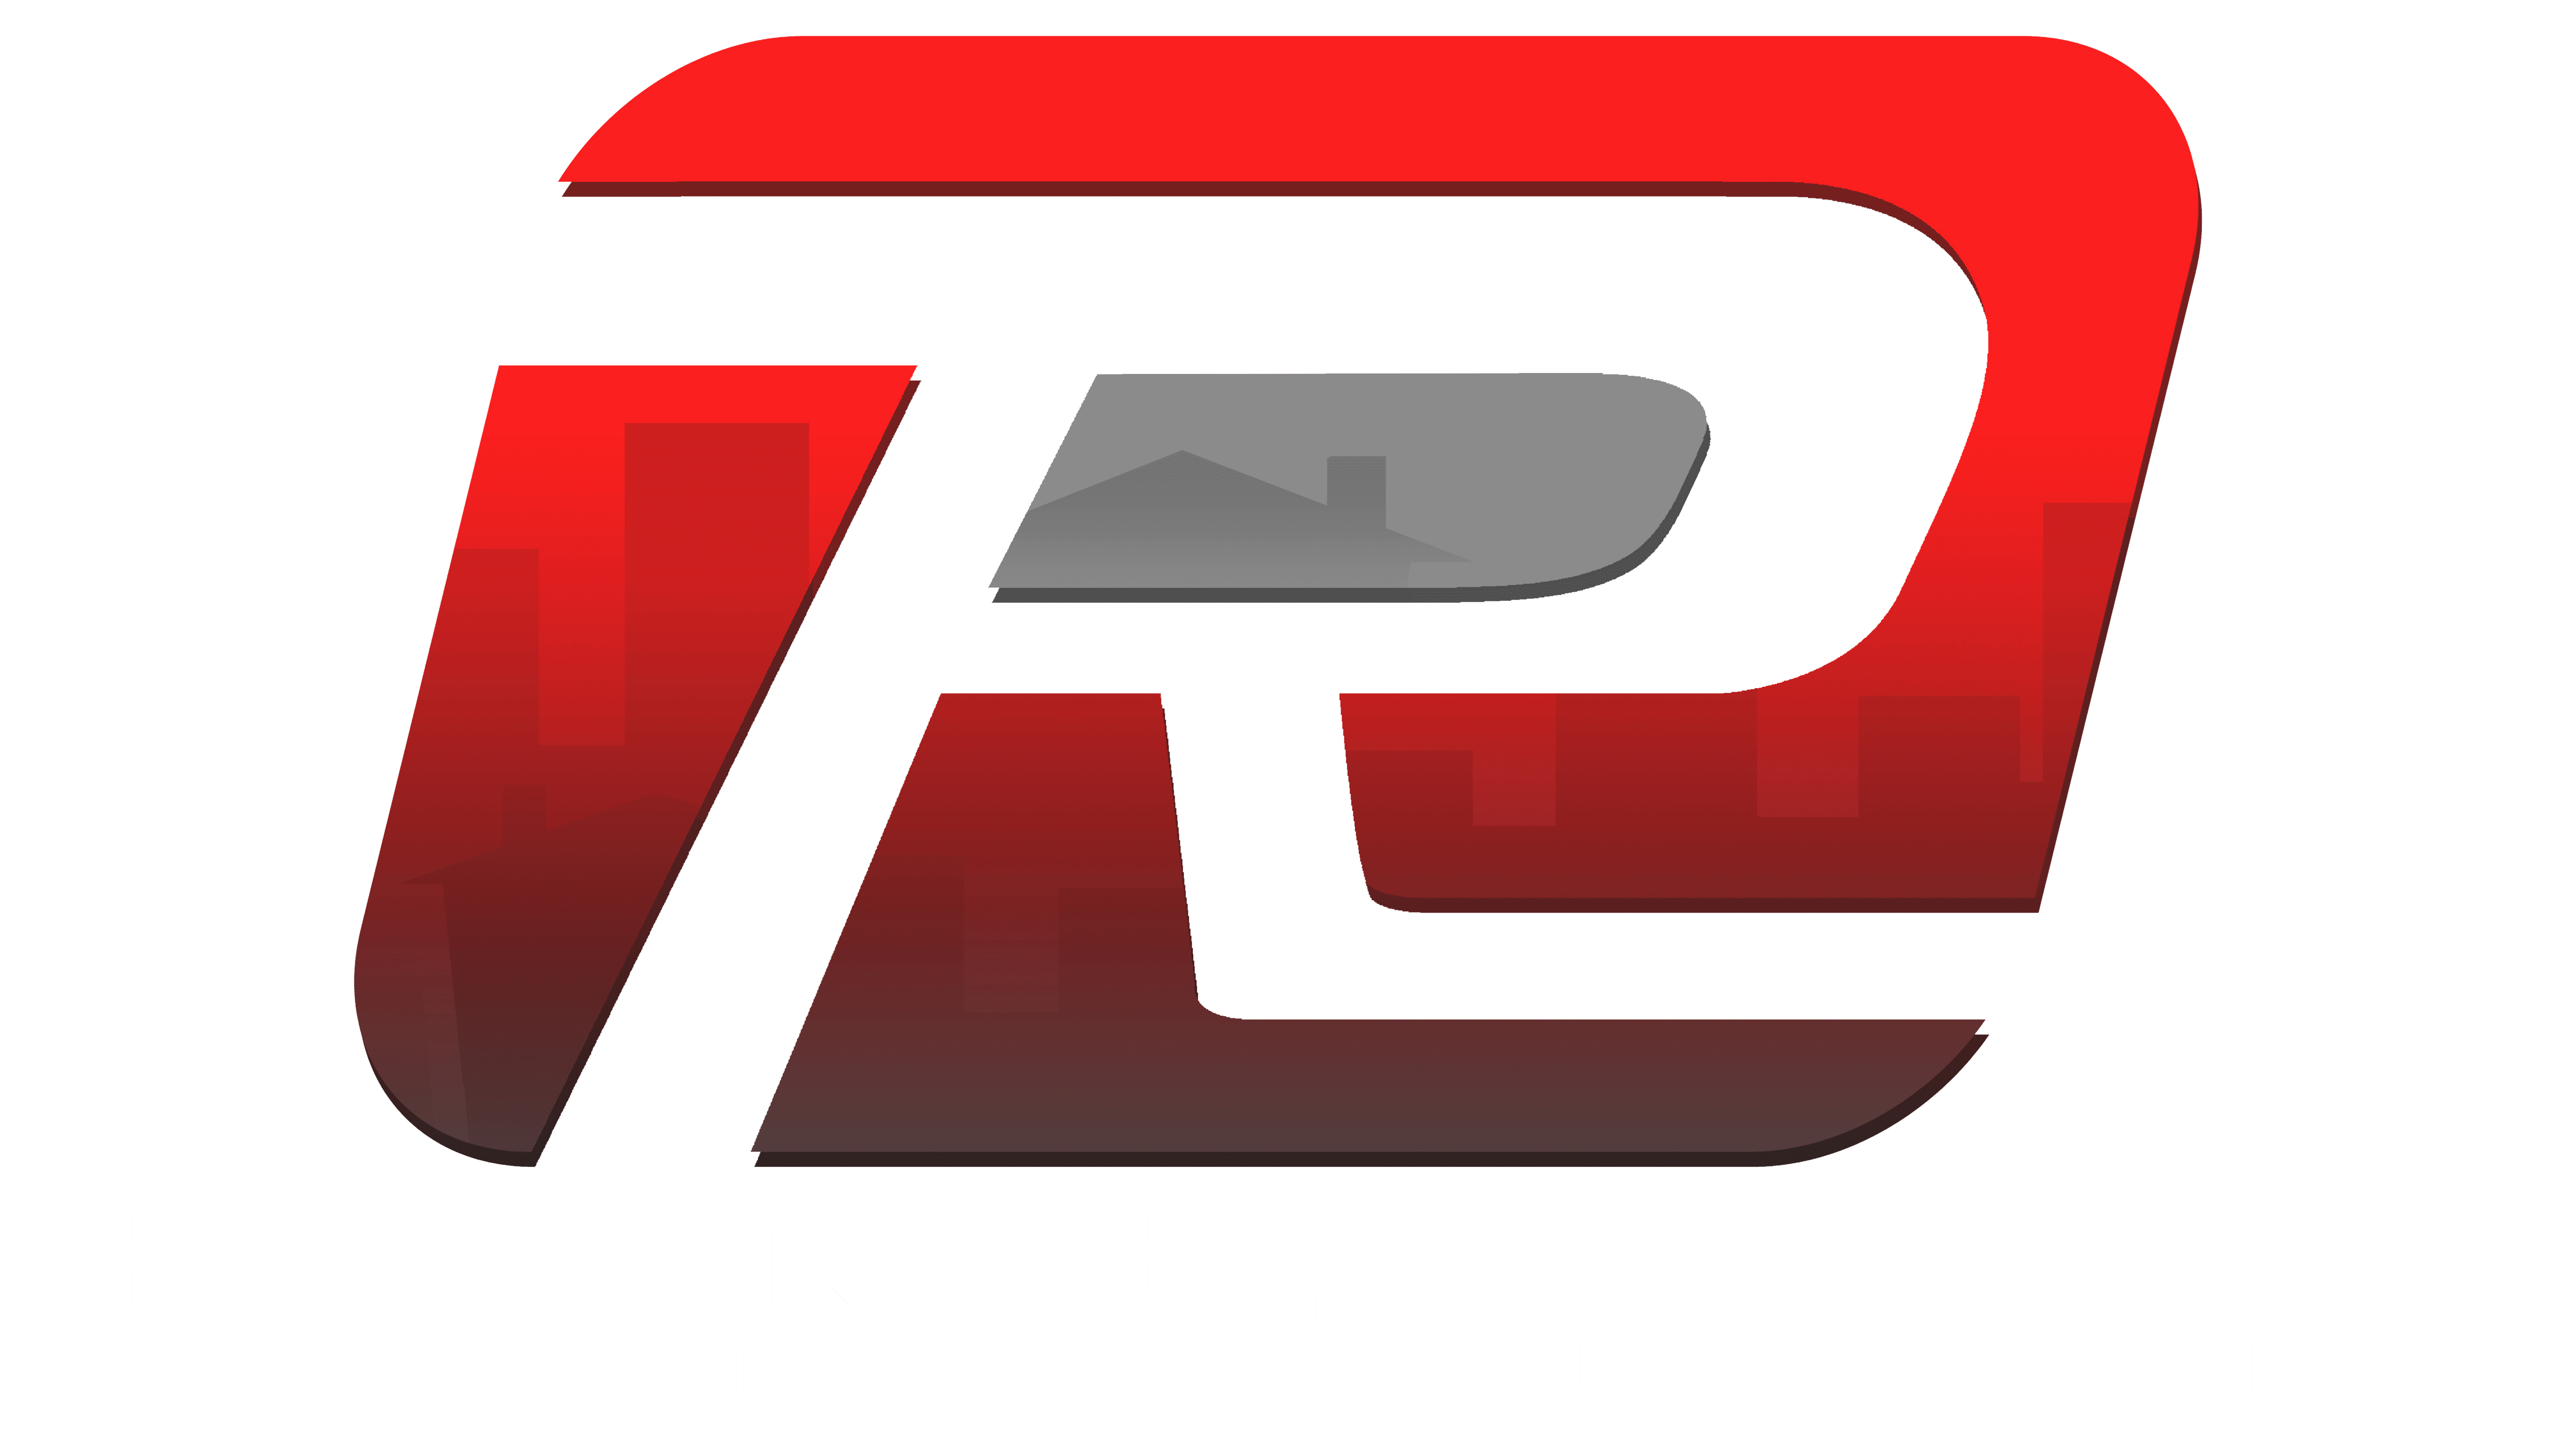 ROMERO MGMT SERVICES